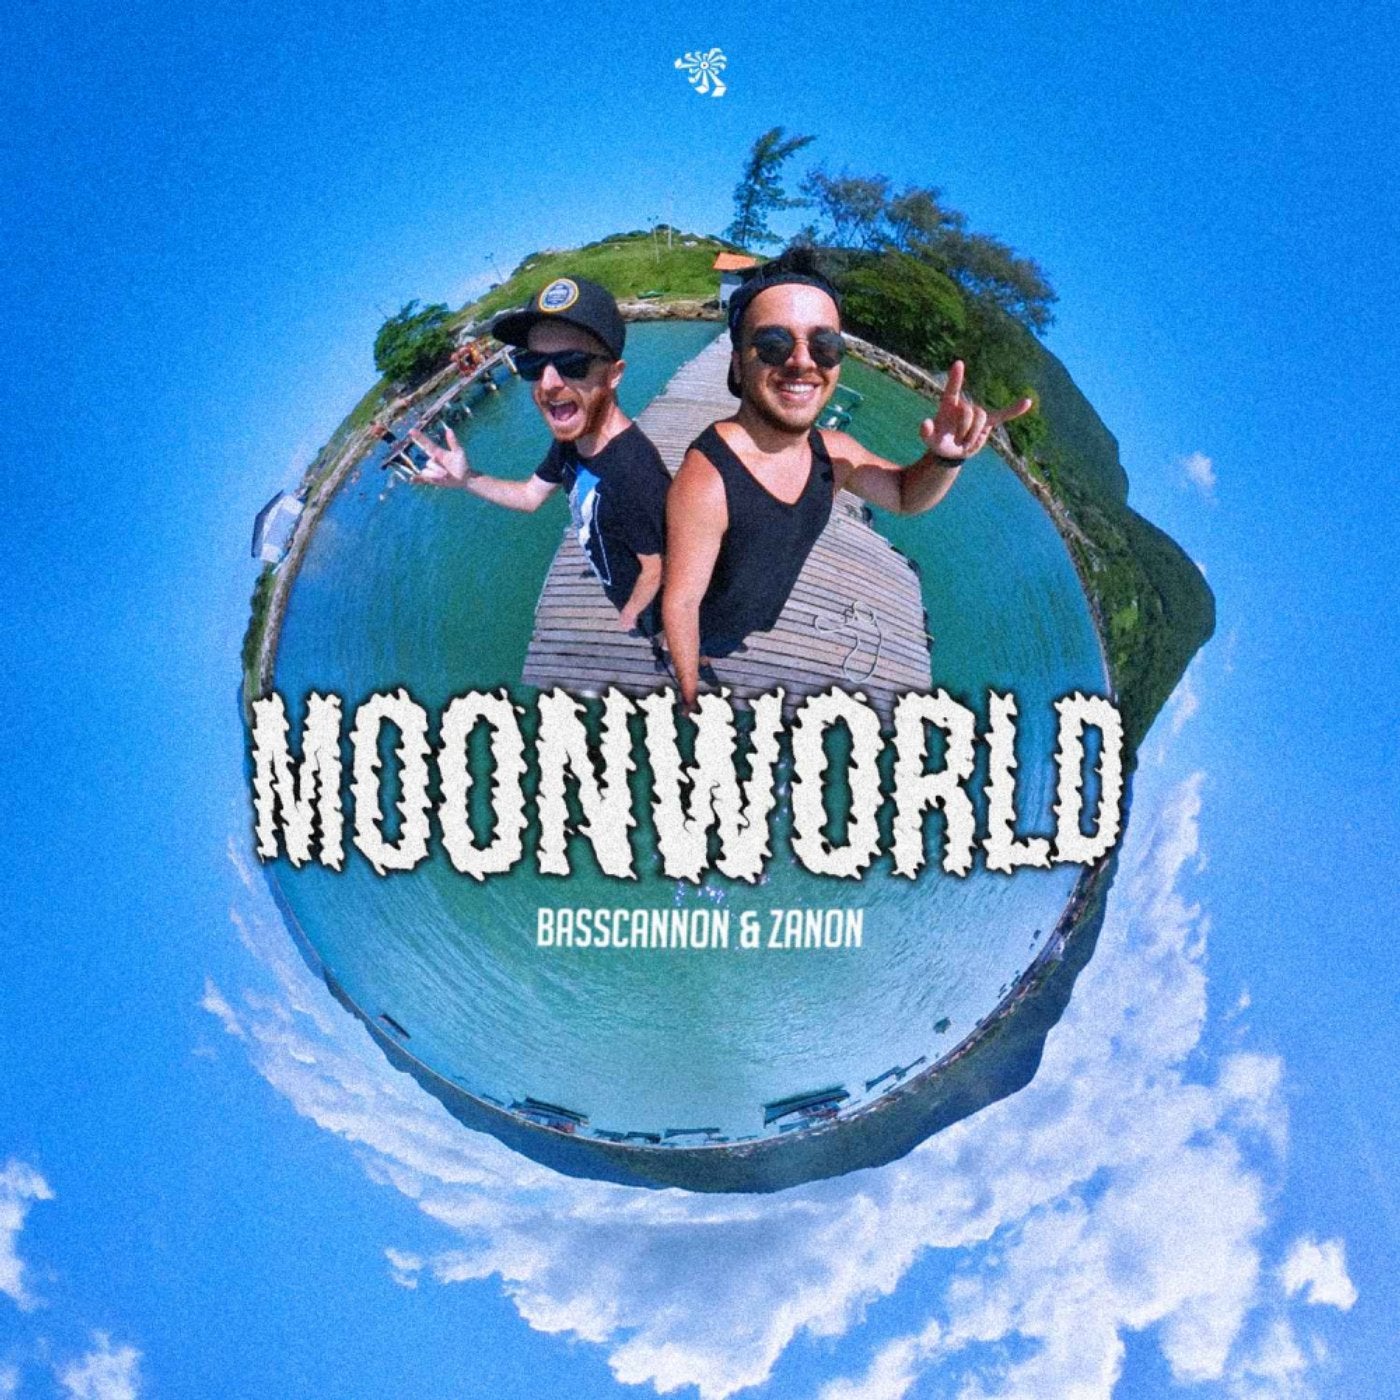 MoonWorld